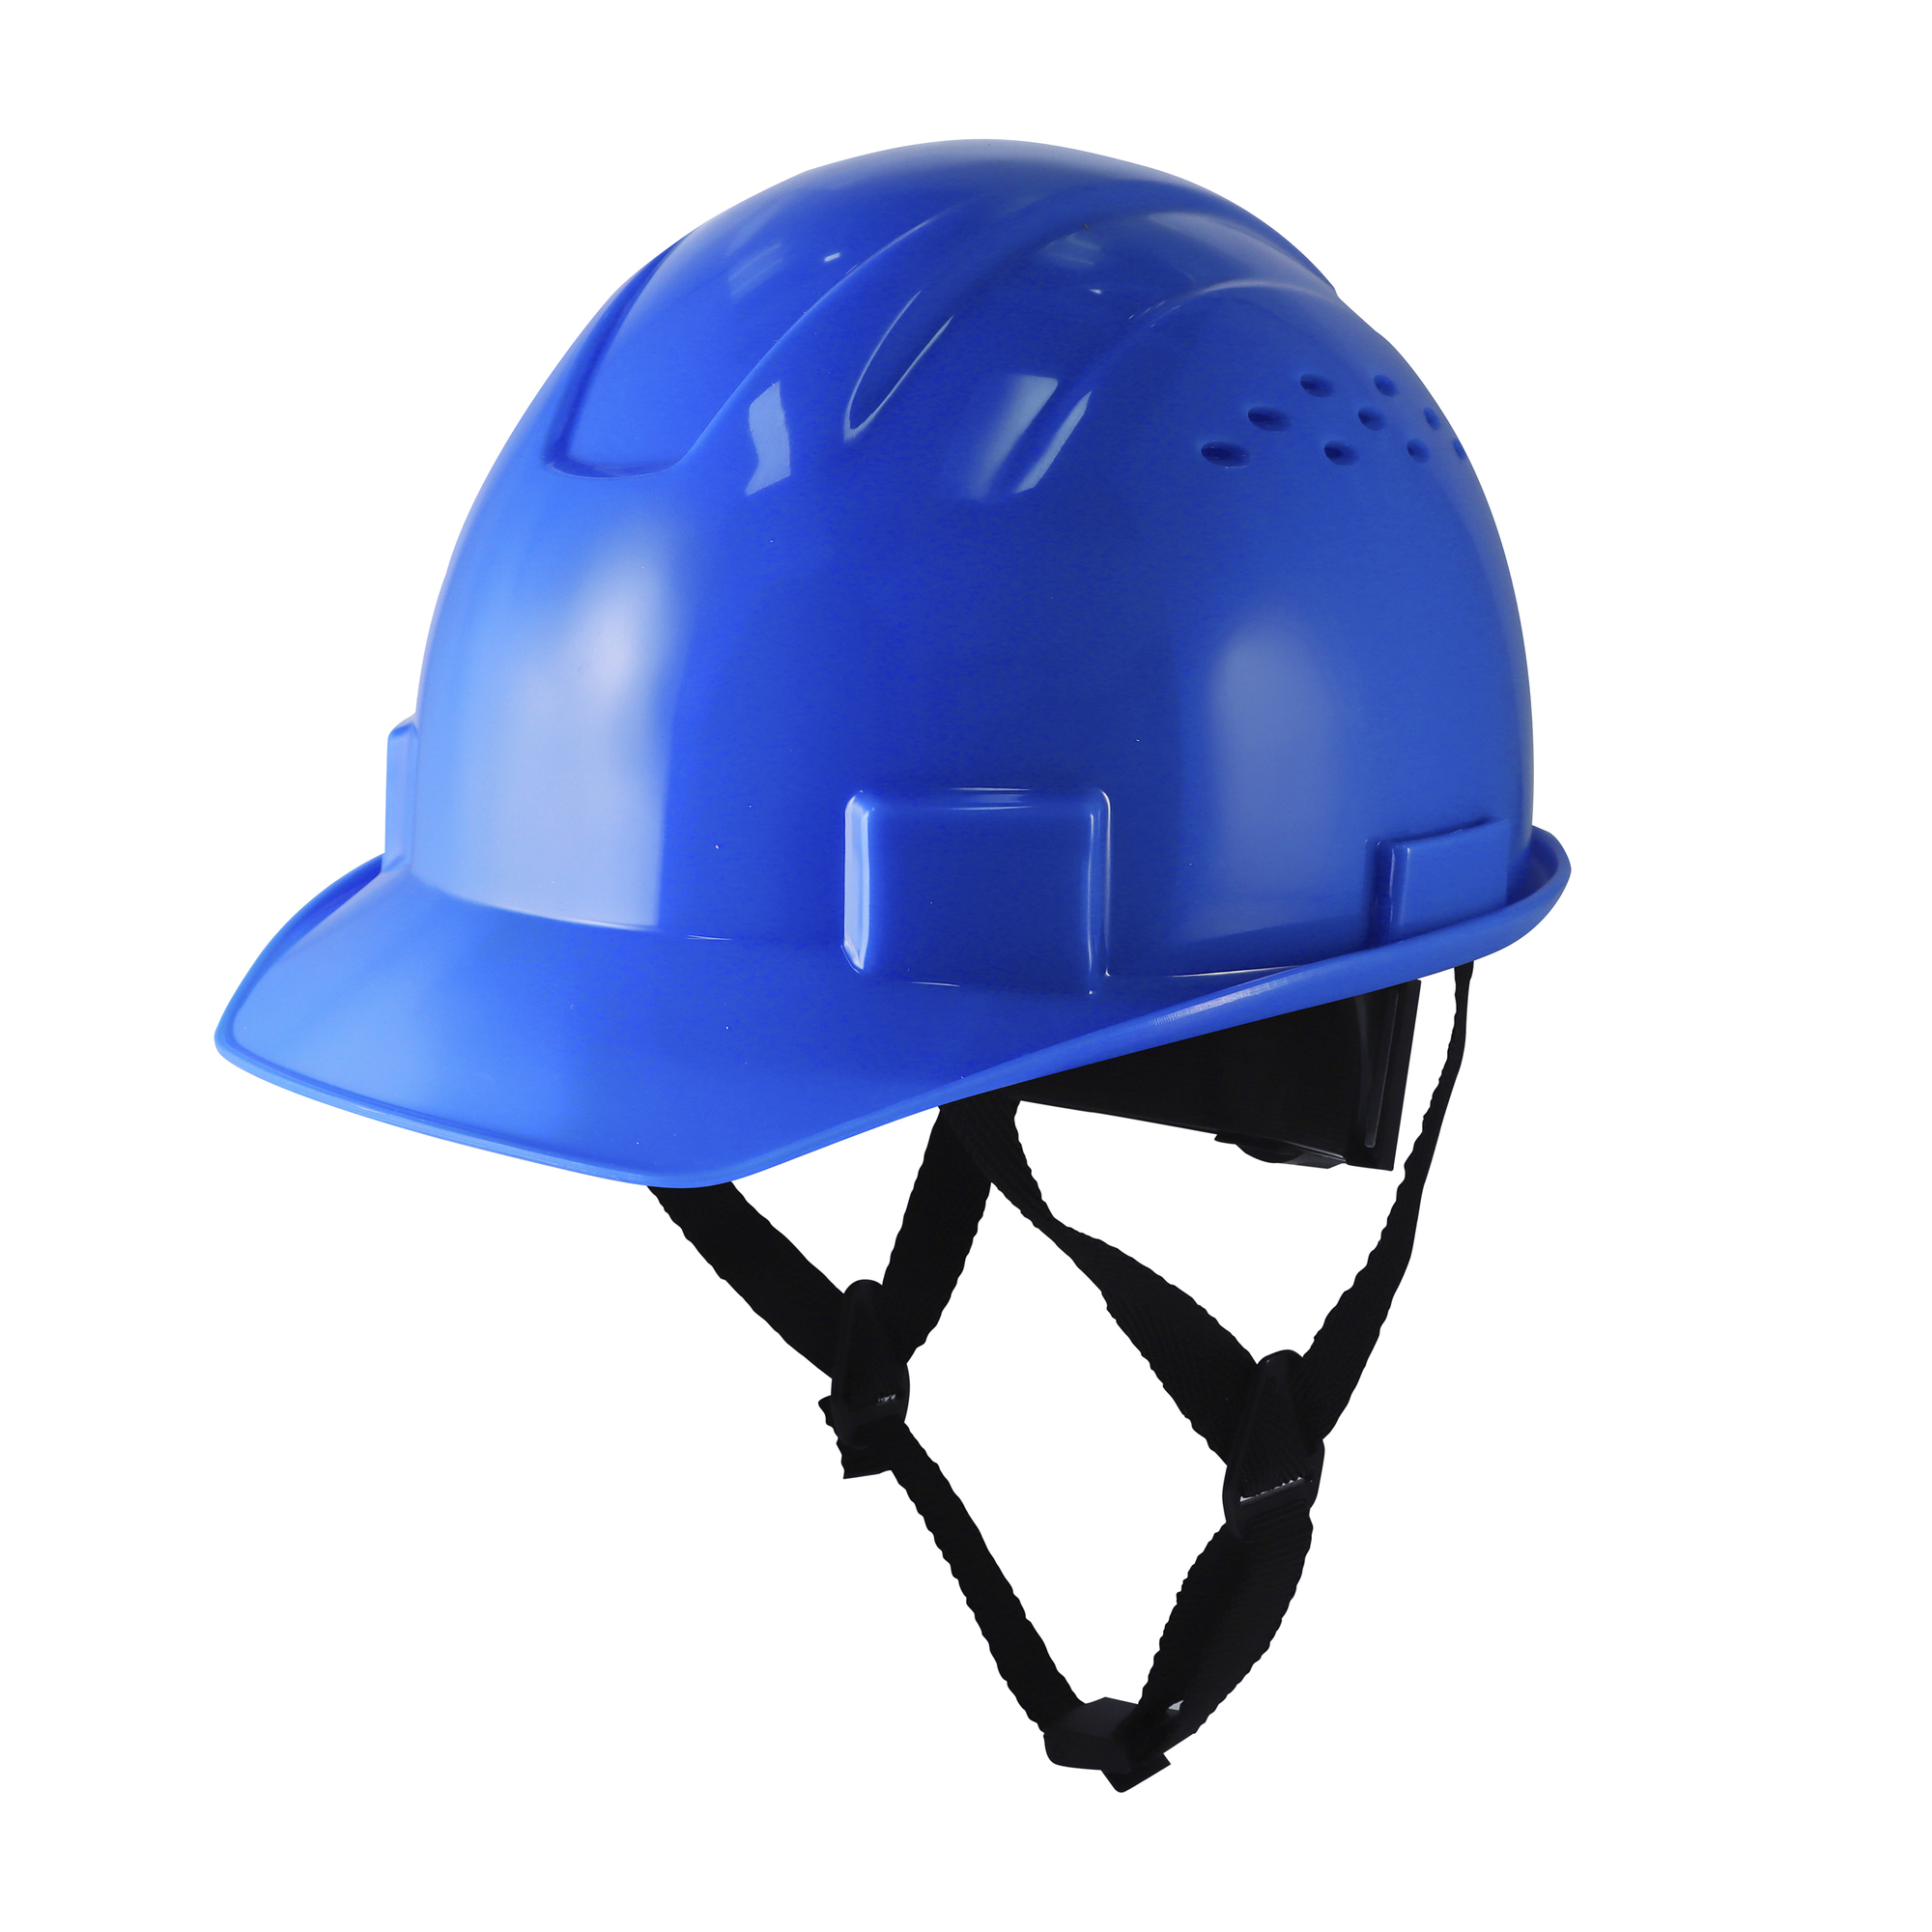 General Electric, Safety Helmet Vented- Blue, Hard Hat Style Helmet, Hat Size One Size, Color Blue, Model GH326B